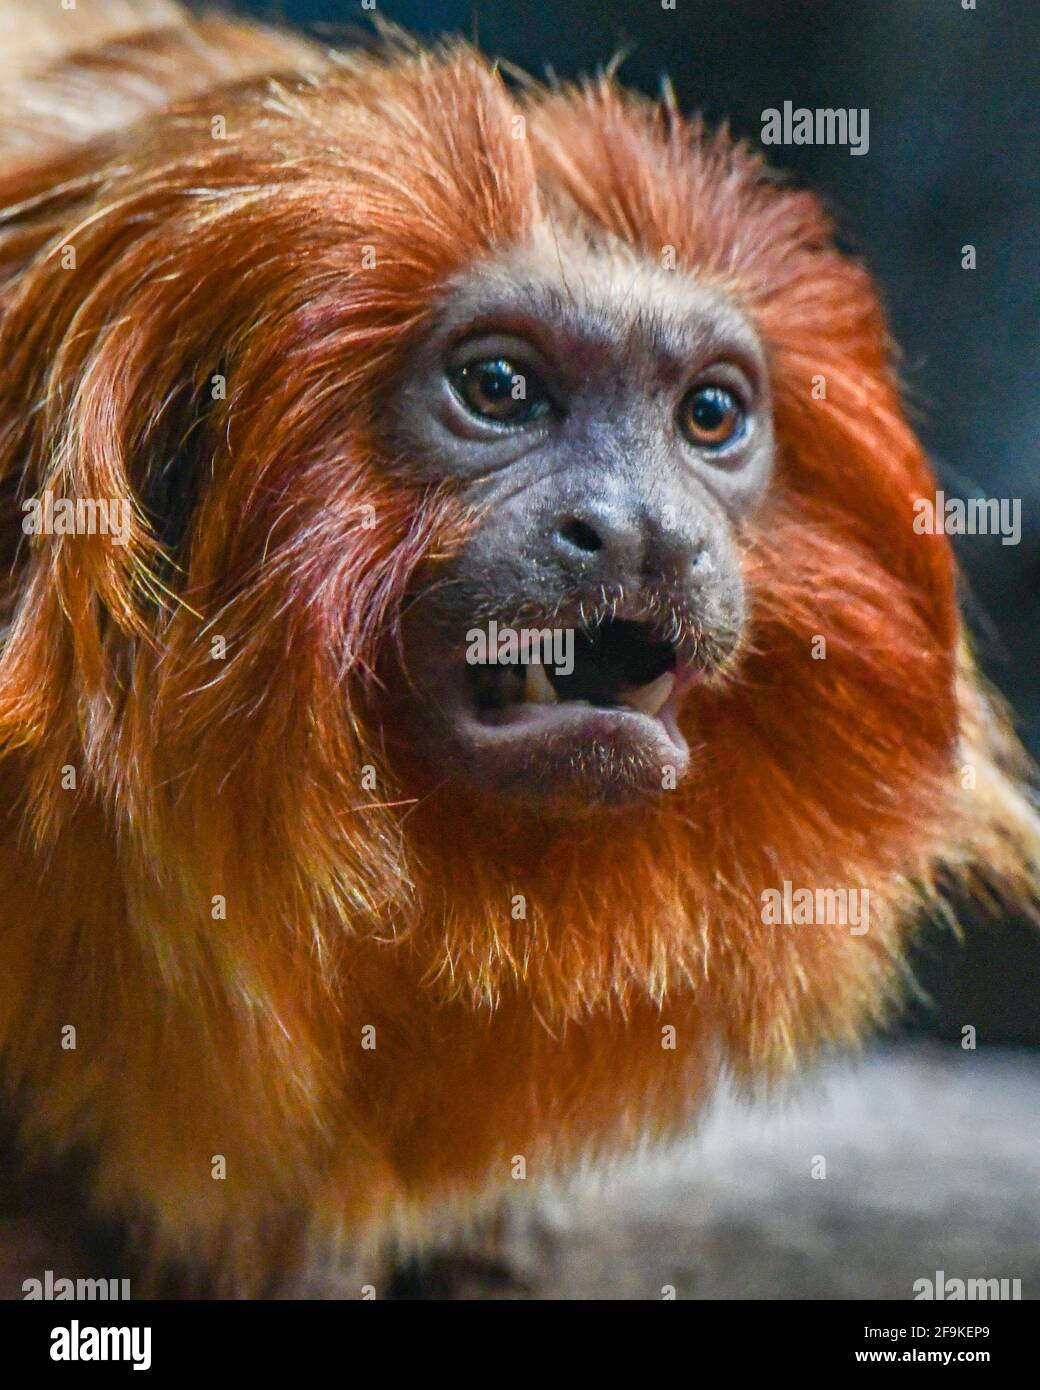 Golden Tamarin - Leontopithecus rosalia - Golden Lion Tamarin - golden marmoset monkey primate Callitrichidae - endangered species due to habitat loss Stock Photo